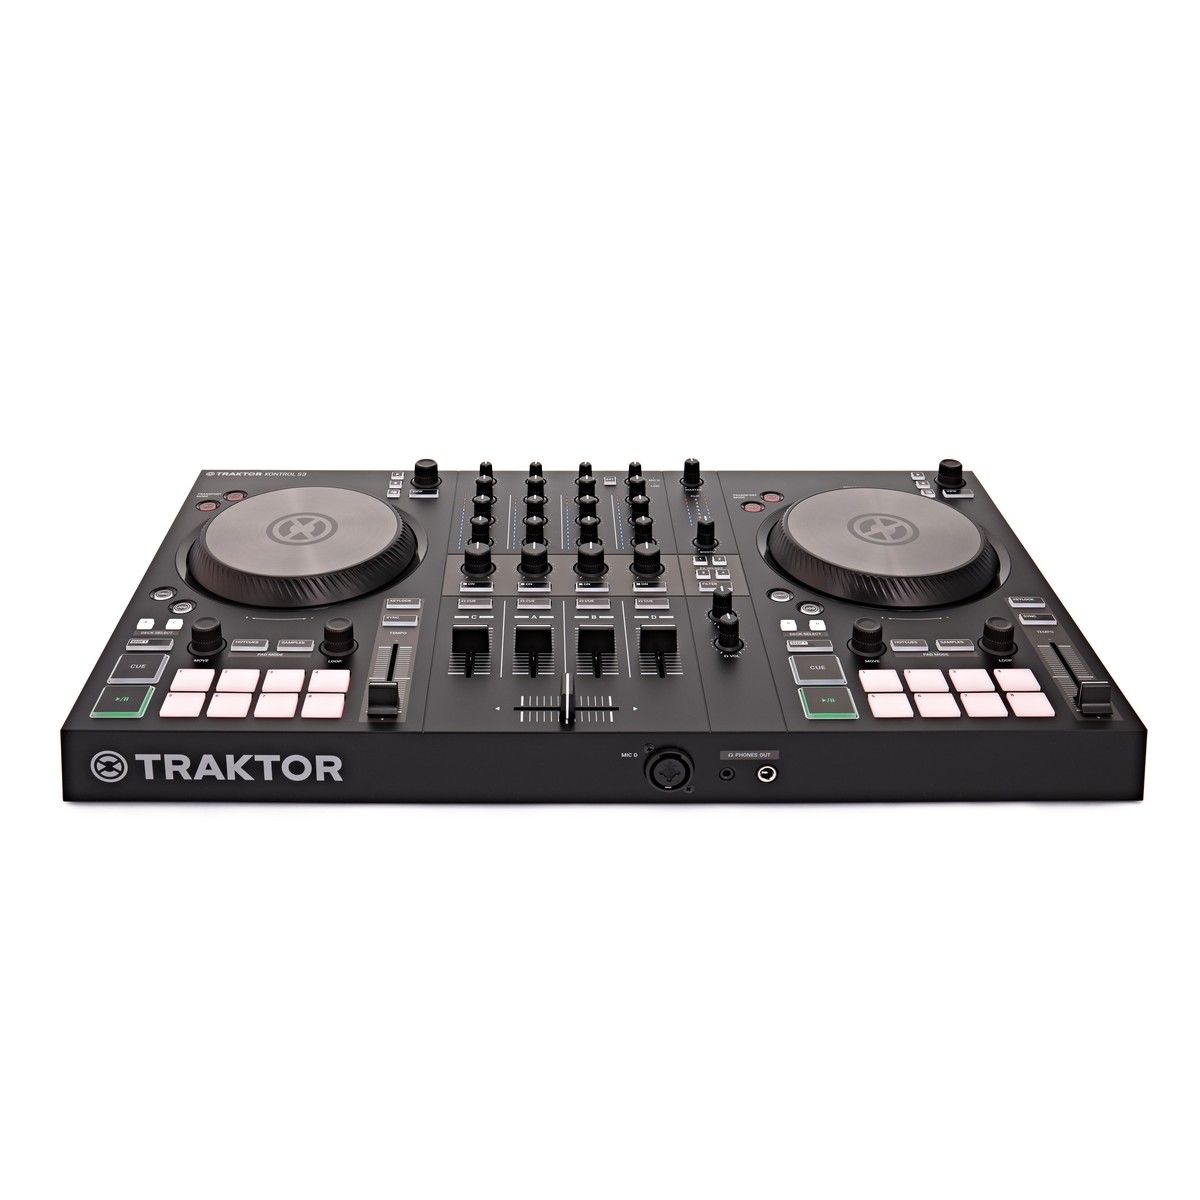  DJ- Native Instruments Traktor Kontrol S3